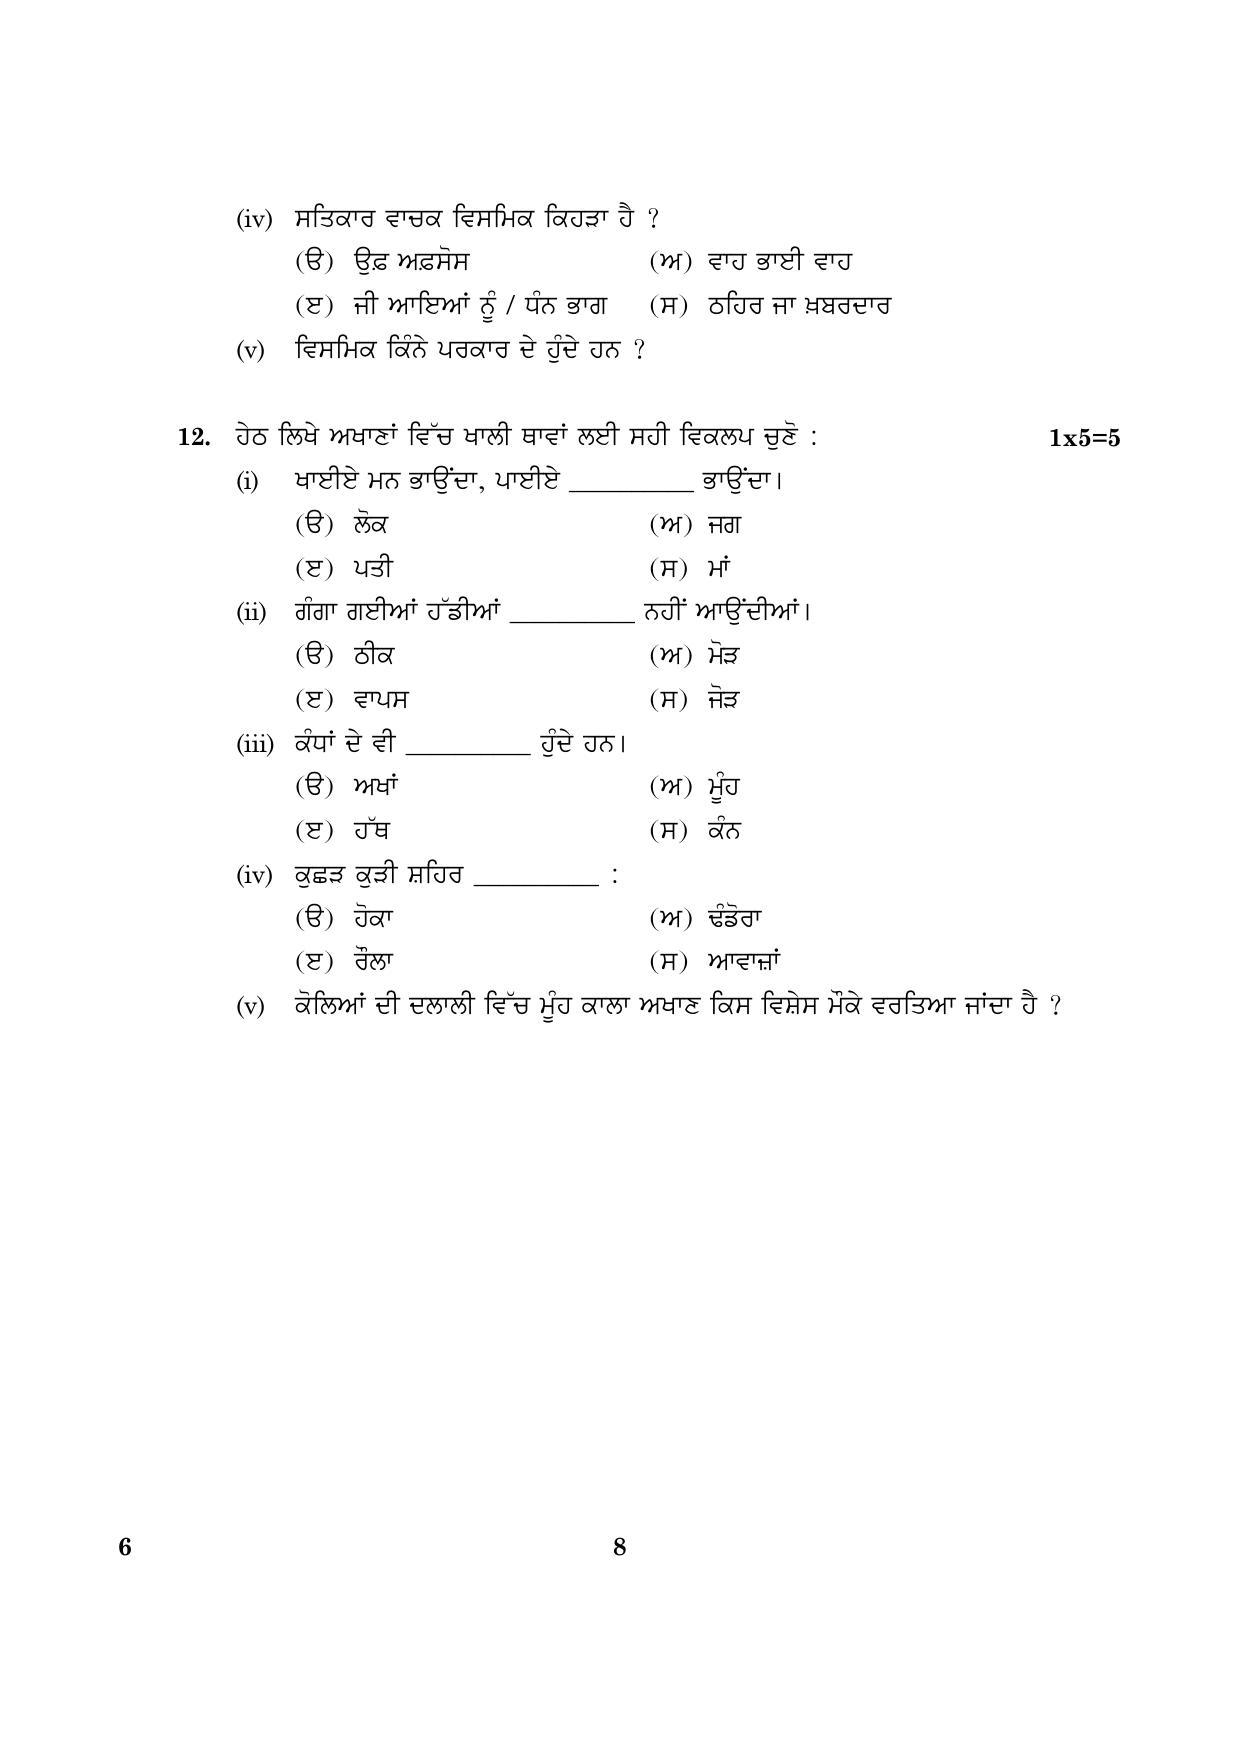 CBSE Class 10 006 Punjabi 2016 Question Paper - Page 8